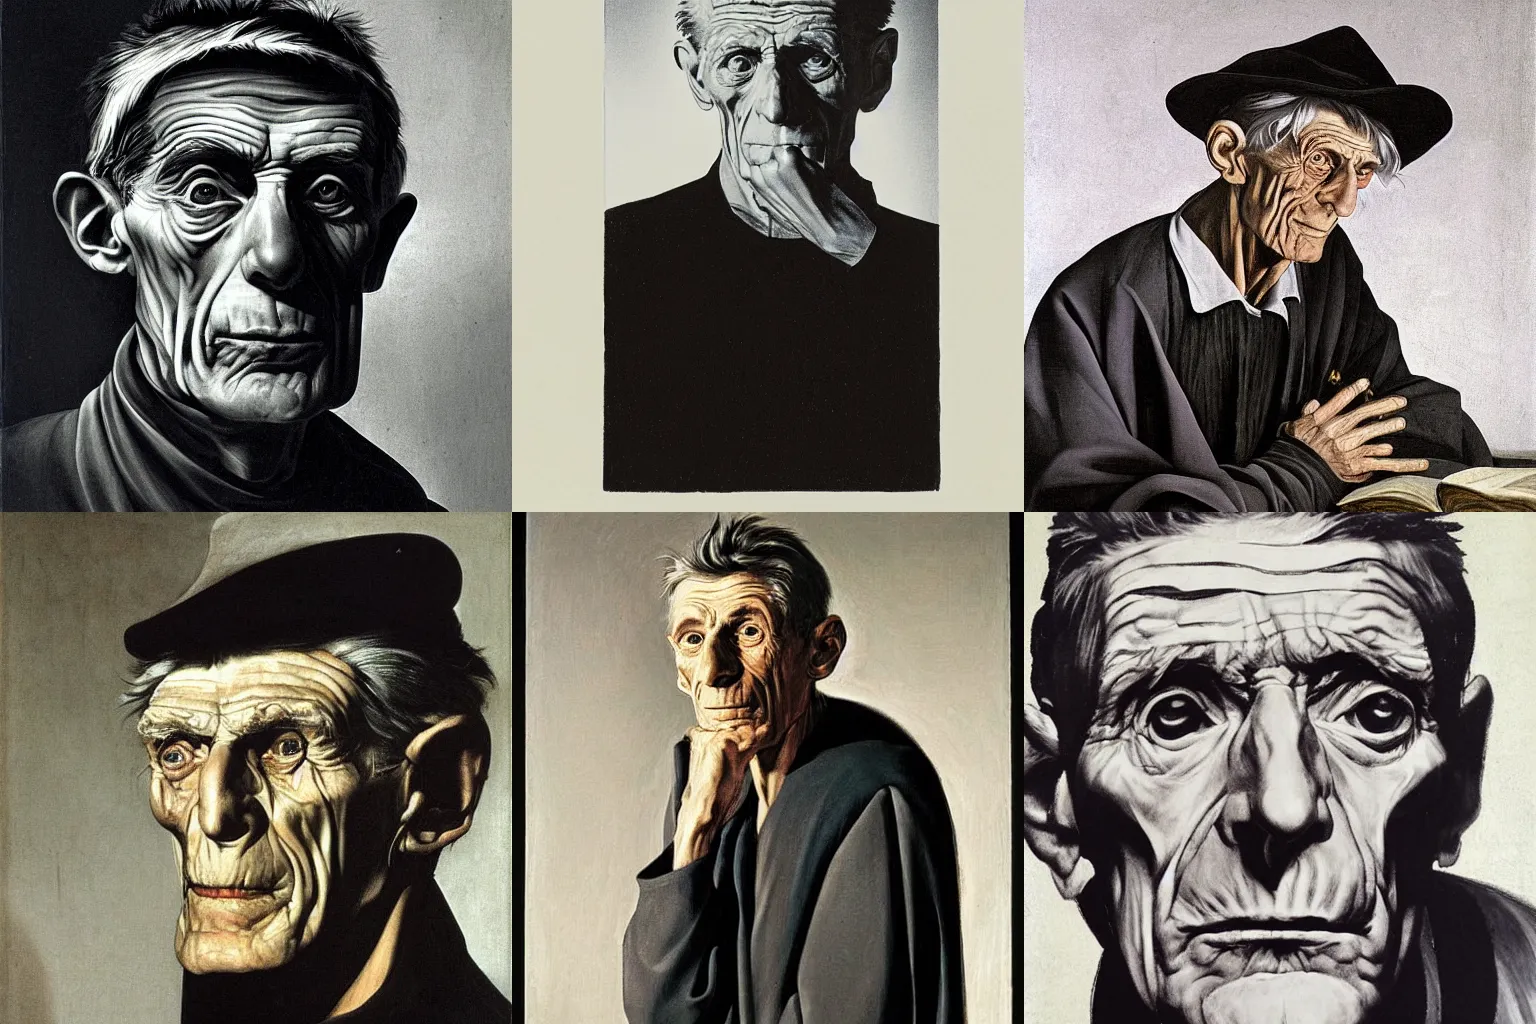 Prompt: portrait of Samuel Beckett by Caravaggio